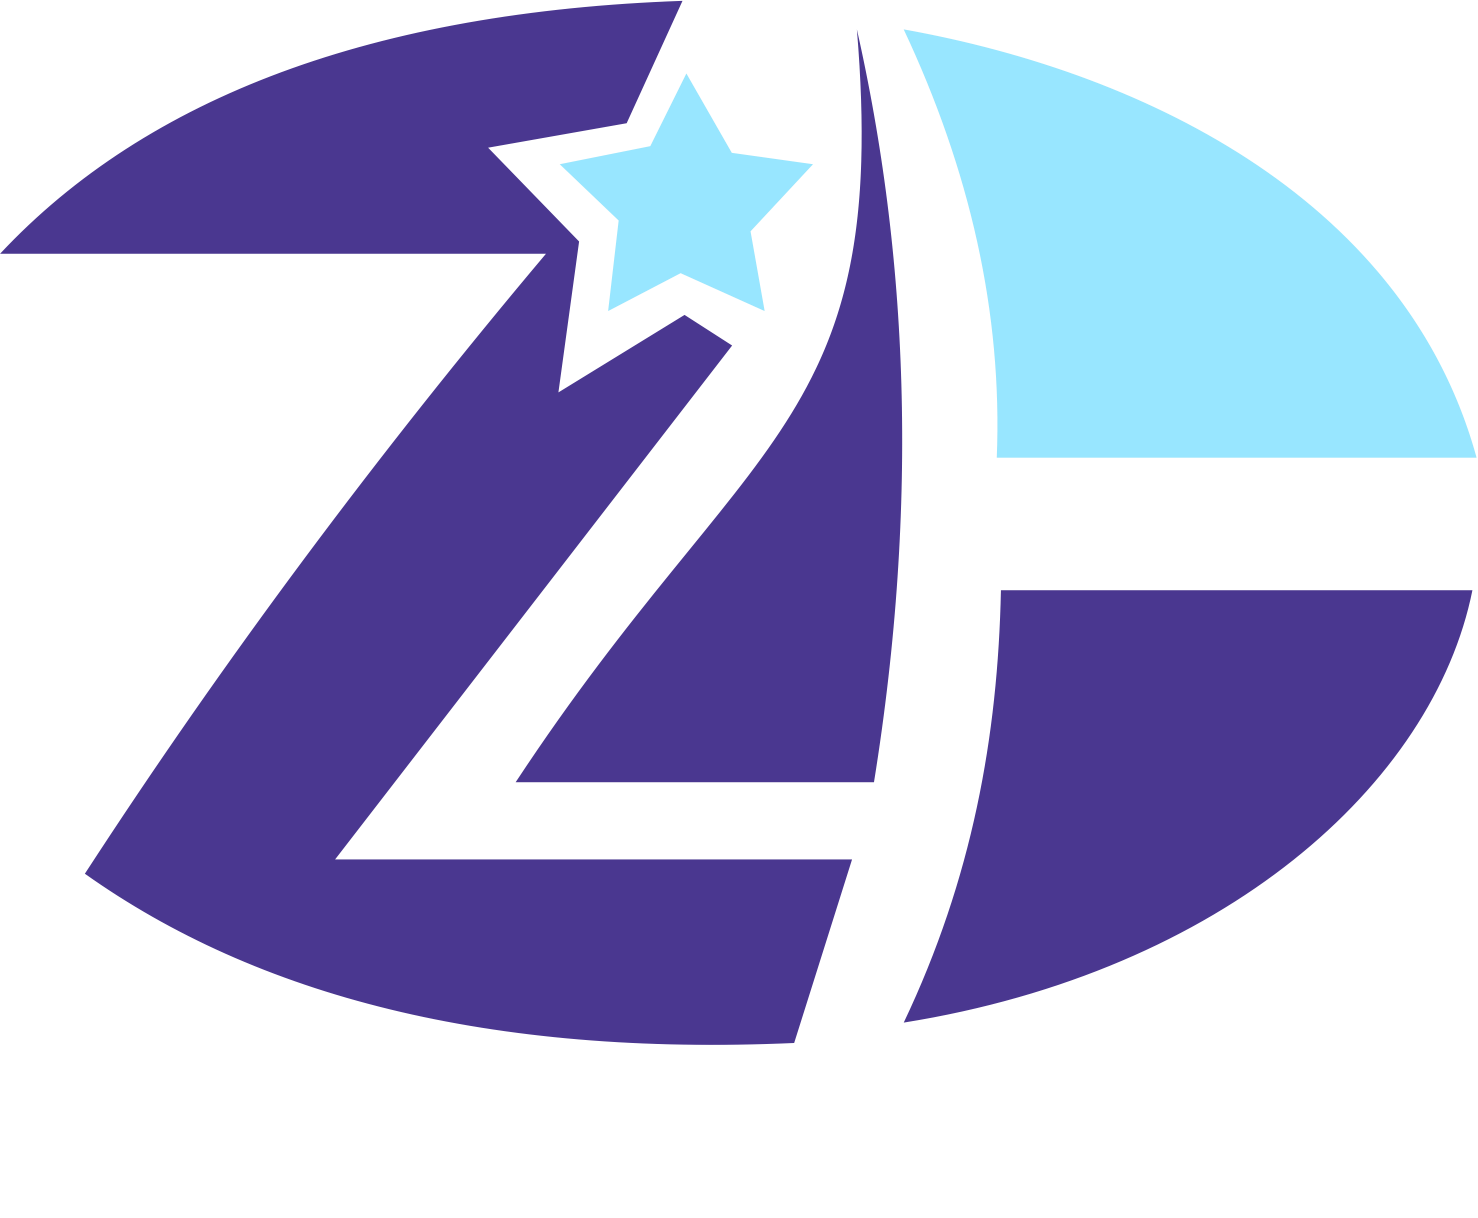 Tecman additions Logo